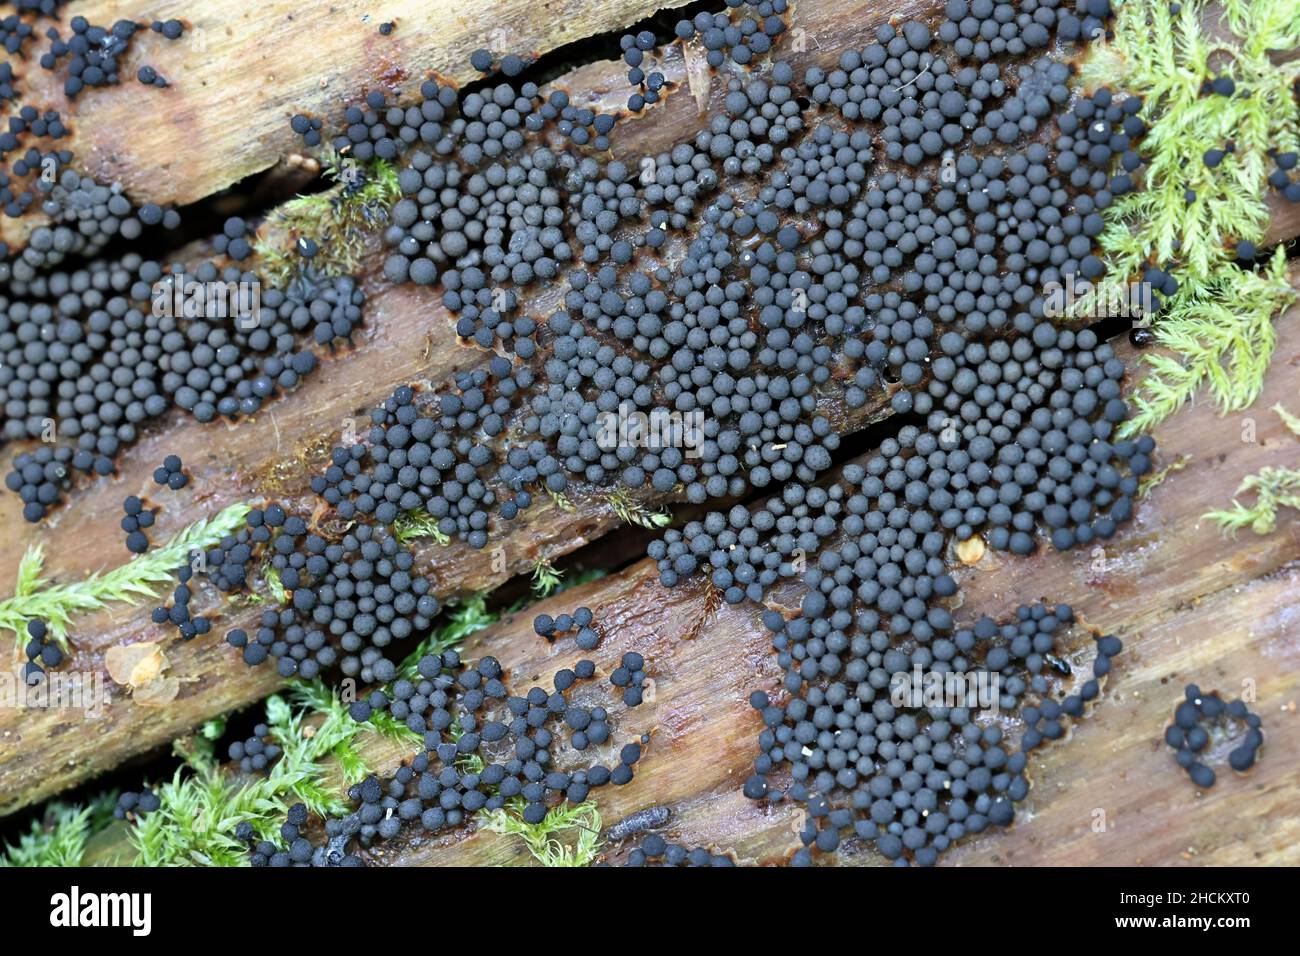 Cribraria argillacea, a slime mold from Finland, no common English name Stock Photo